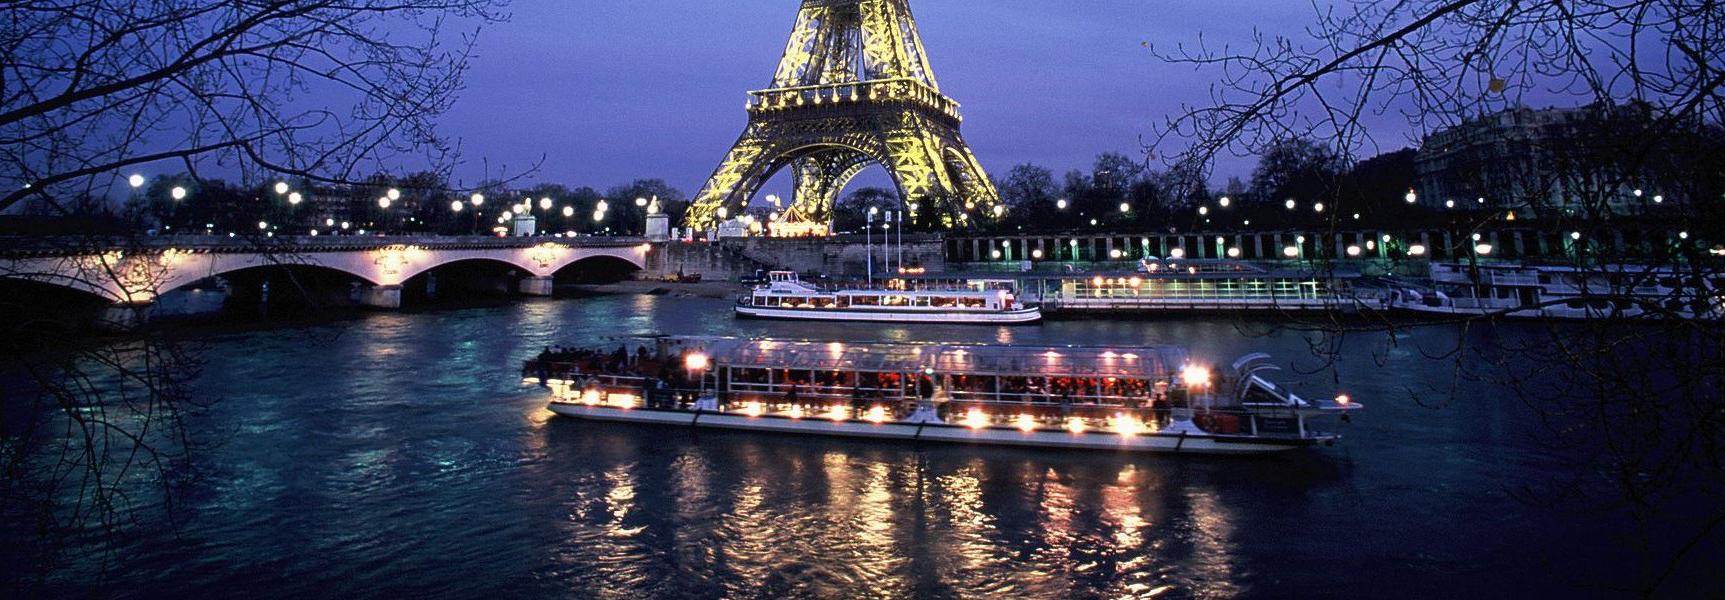 Eiffel Tower Dinner Cruise